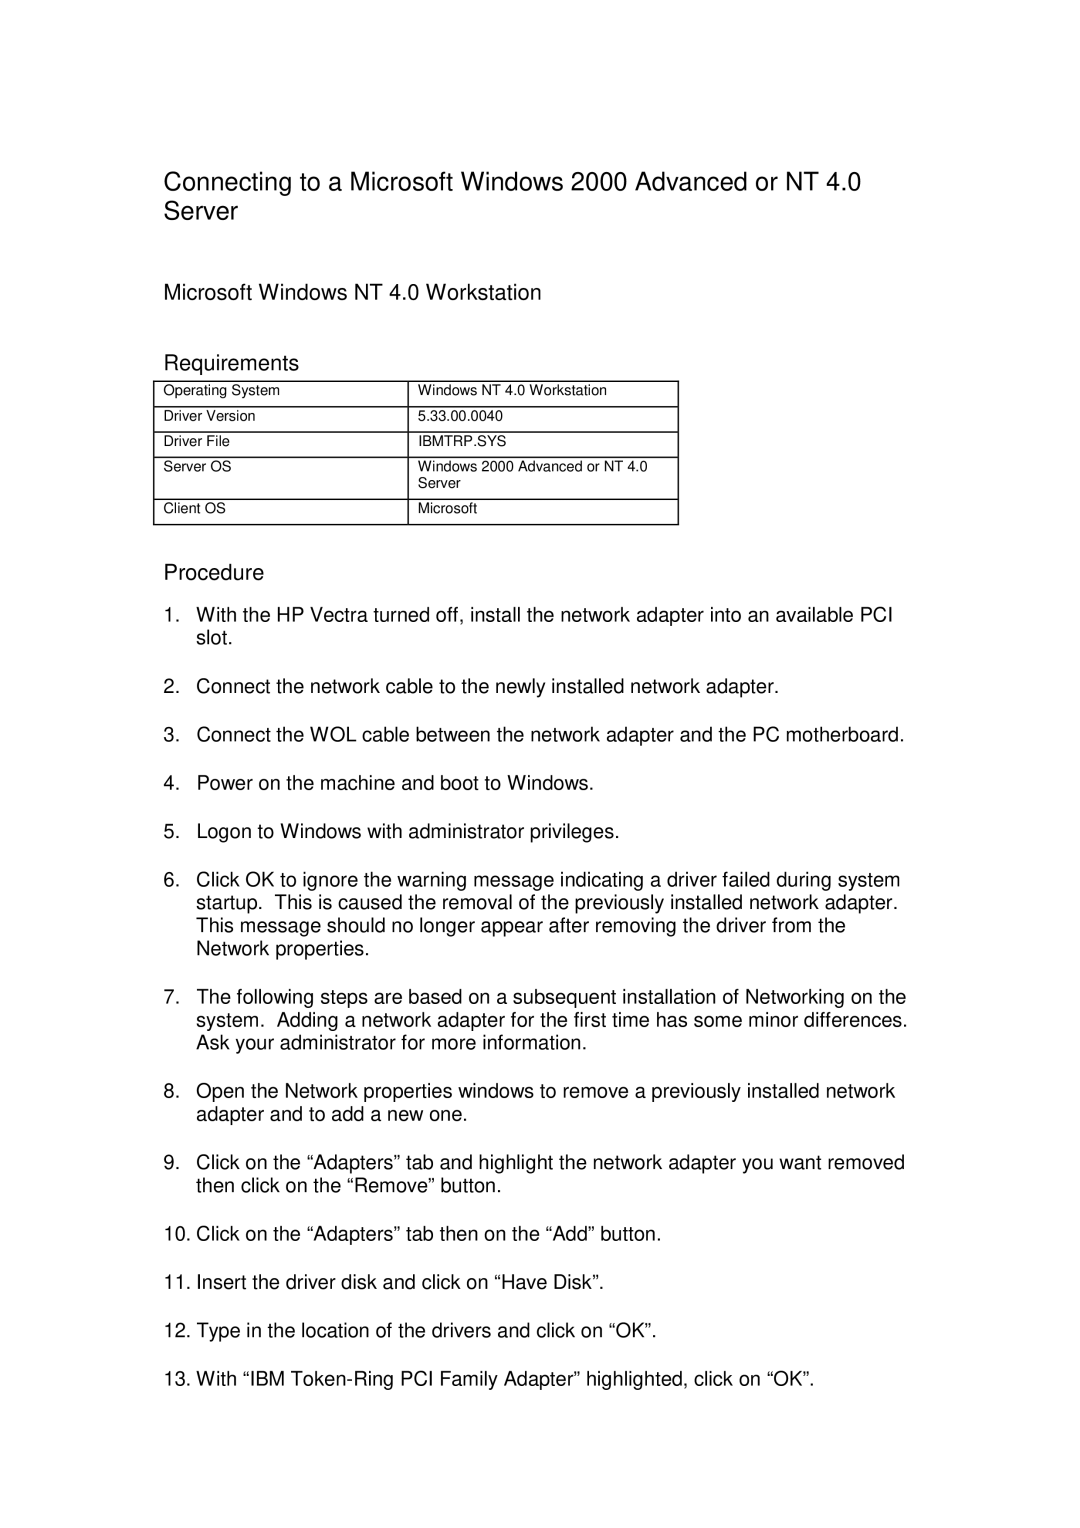 IBM WL2 manual Connecting to a Microsoft Windows 2000 Advanced or NT 4.0 Server, Procedure 